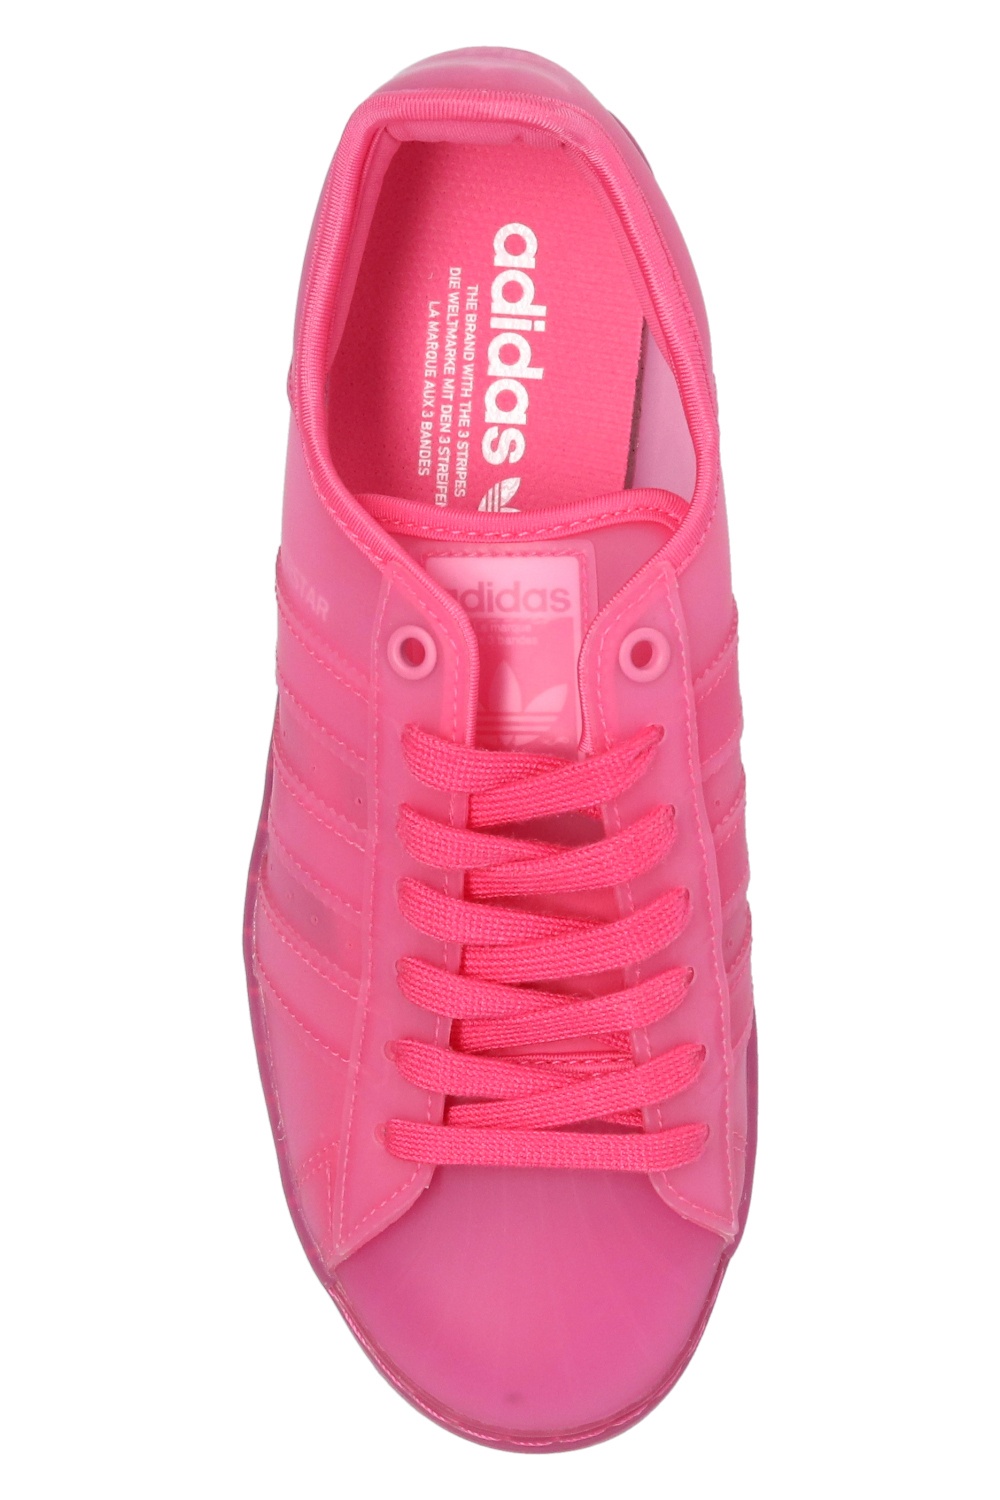 adidas superstar pink 39 1 3